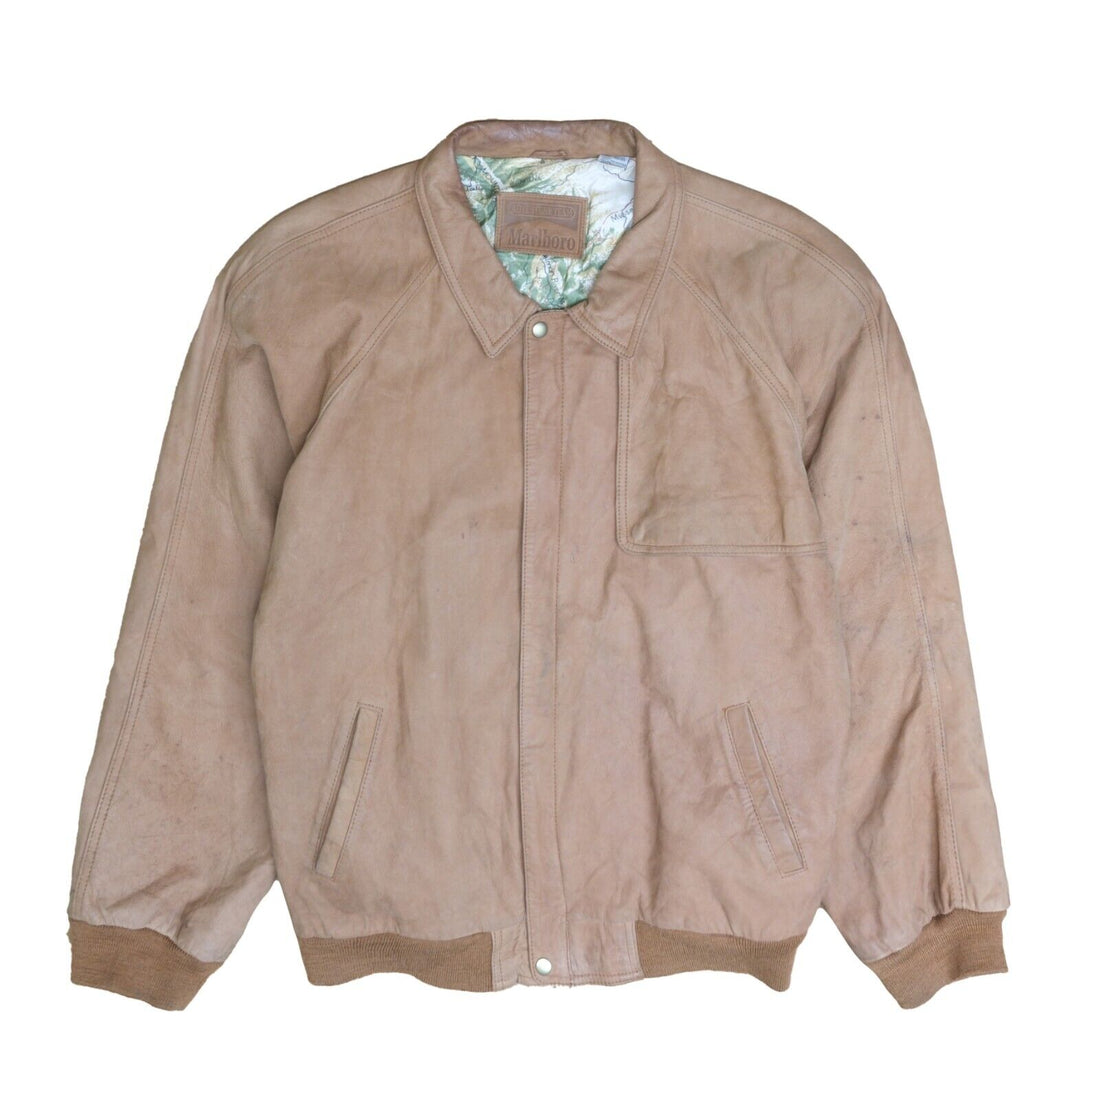 Vintage Marlboro Adventure Team Leather Suede Bomber Jacket Size XL Brown